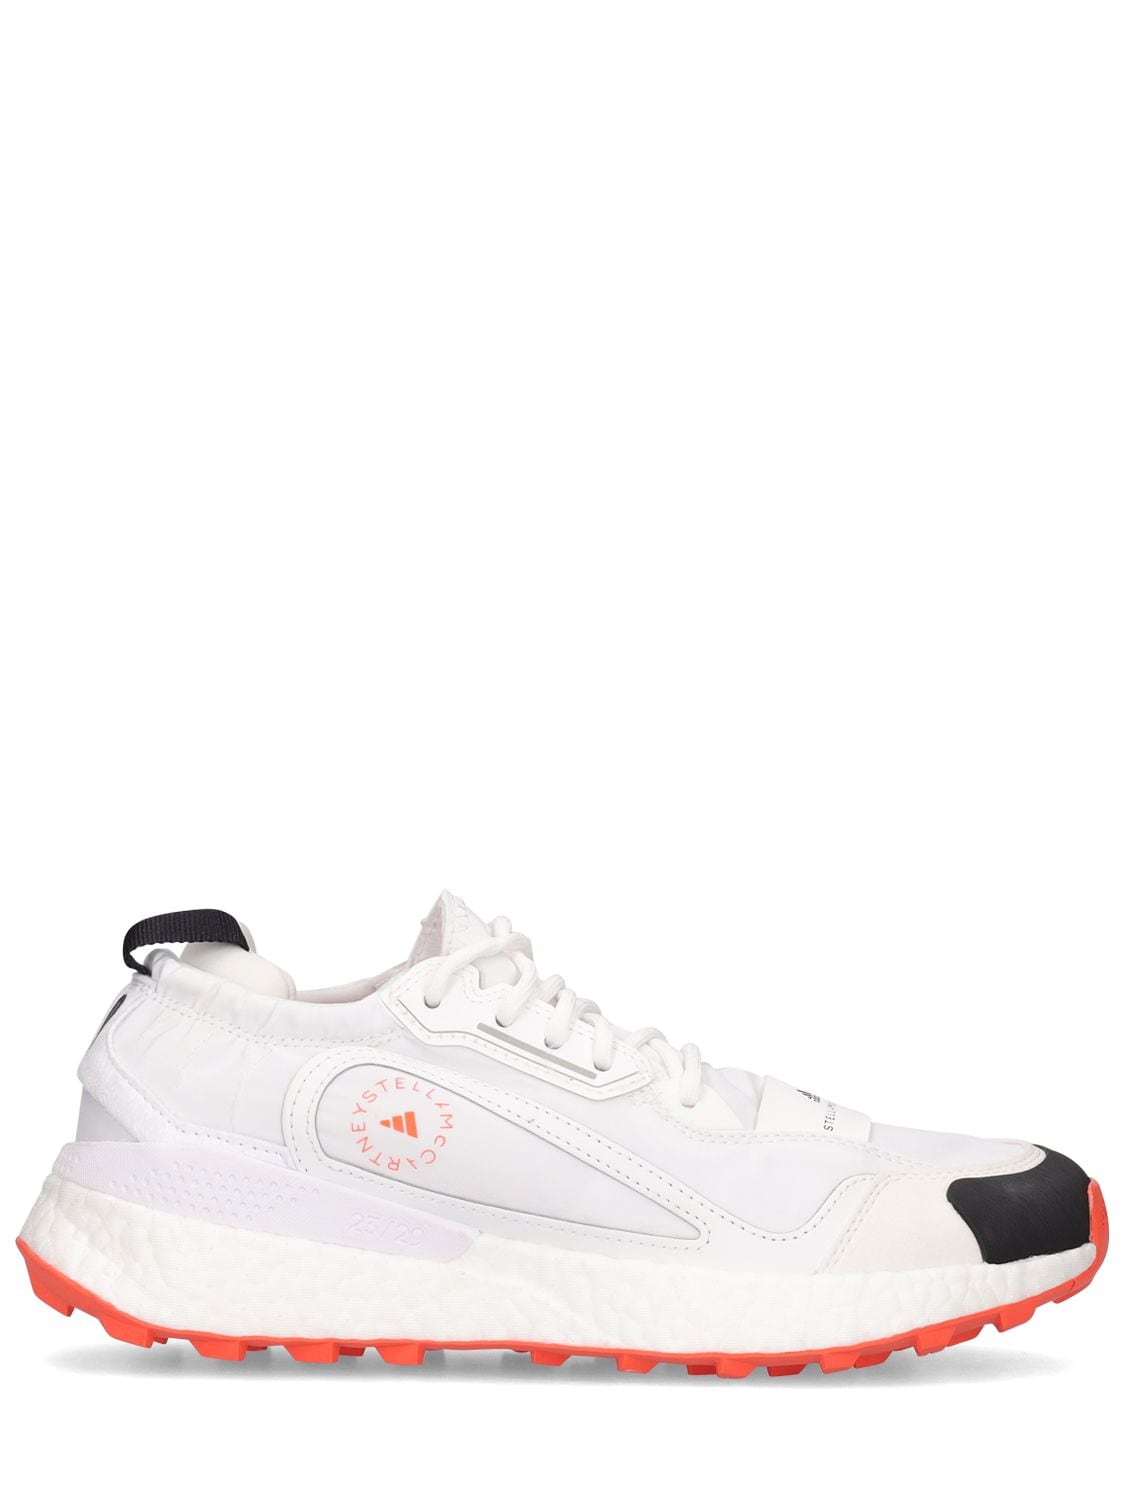 Adidas By Stella Mccartney Asmc Outdoor Boost 2.0 Light Sneakers In Bianca/arancio